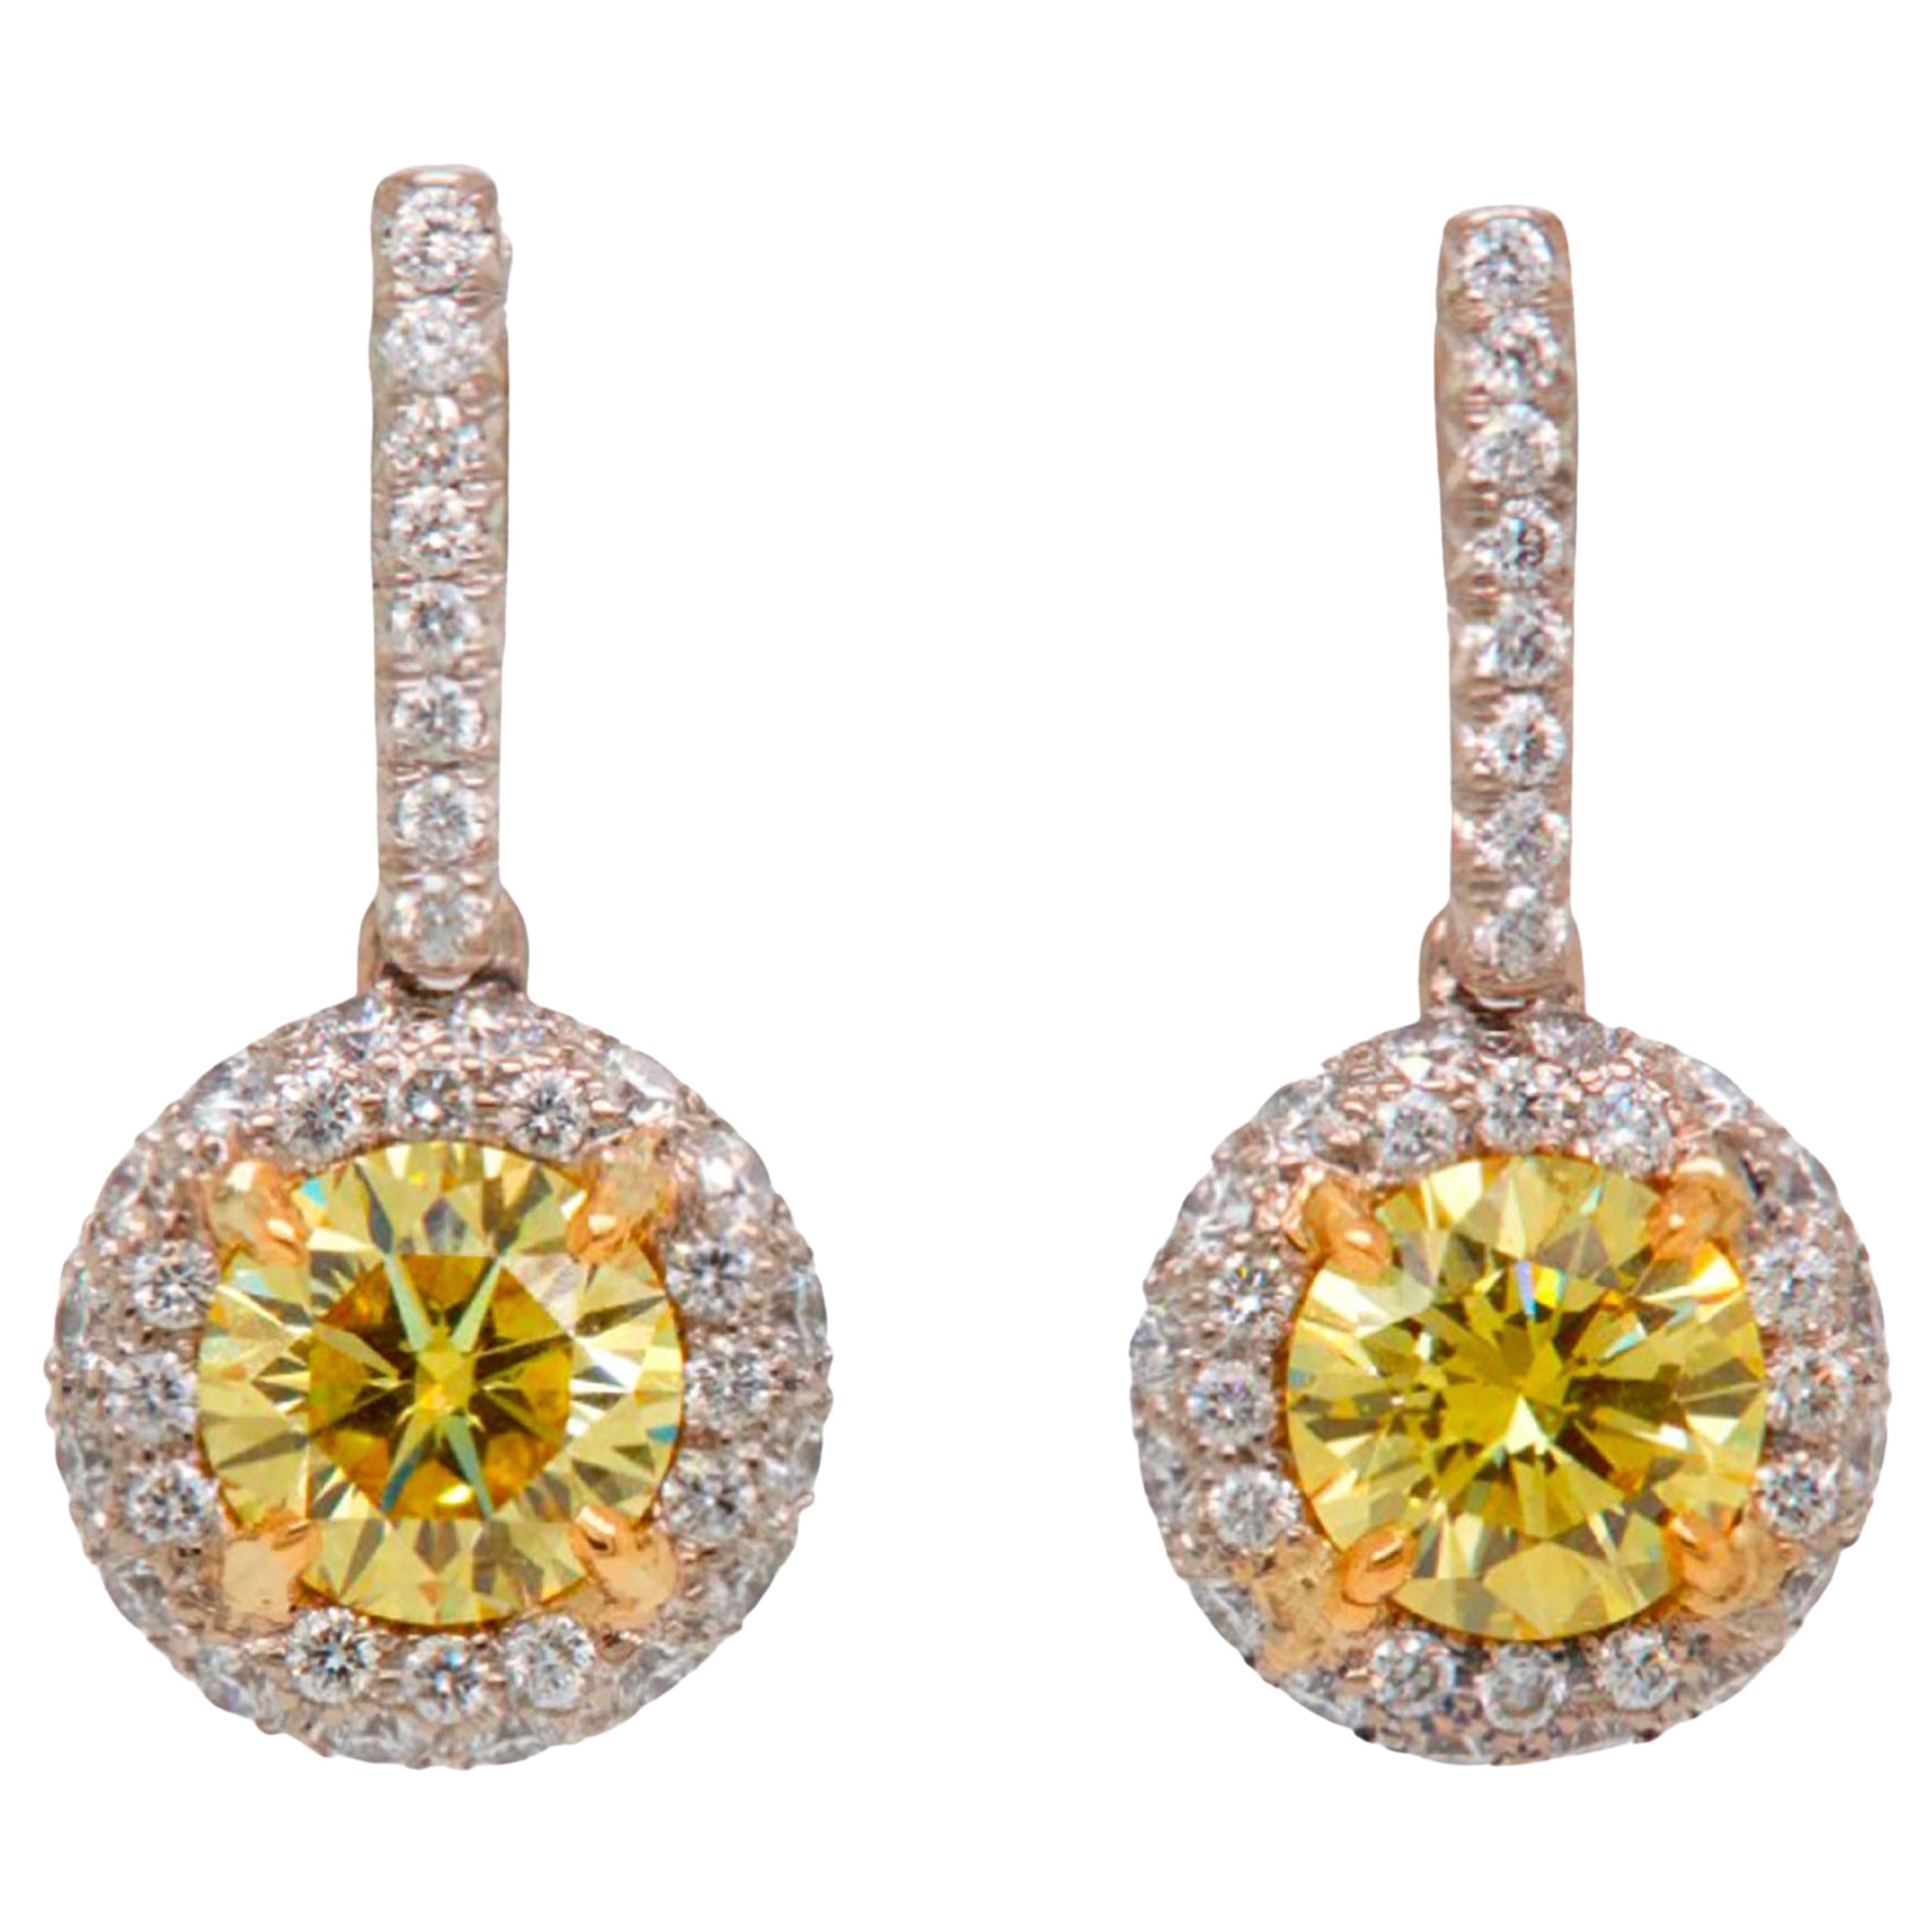 2.09 Carat Fancy Vivid Yellow Diamond Drop Earrings with Halo, GIA Report